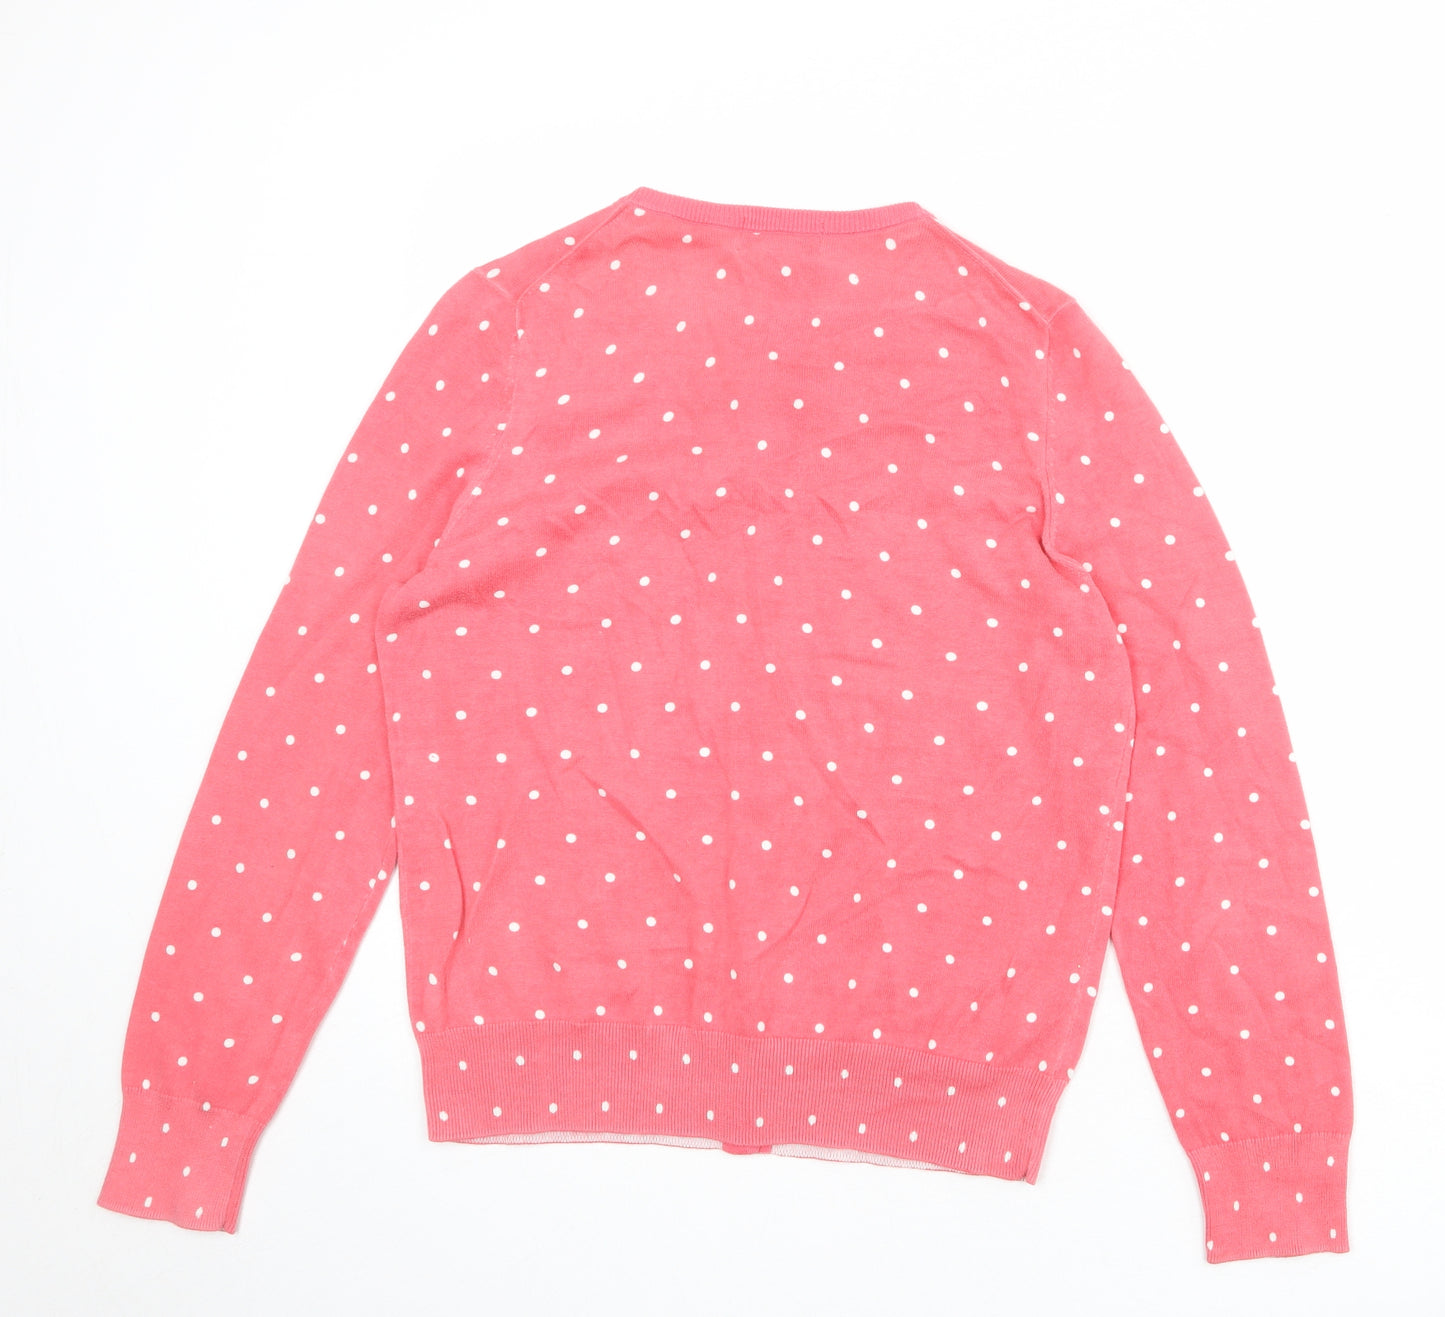 Lands' End Womens Pink Round Neck Polka Dot 100% Cotton Cardigan Jumper Size M